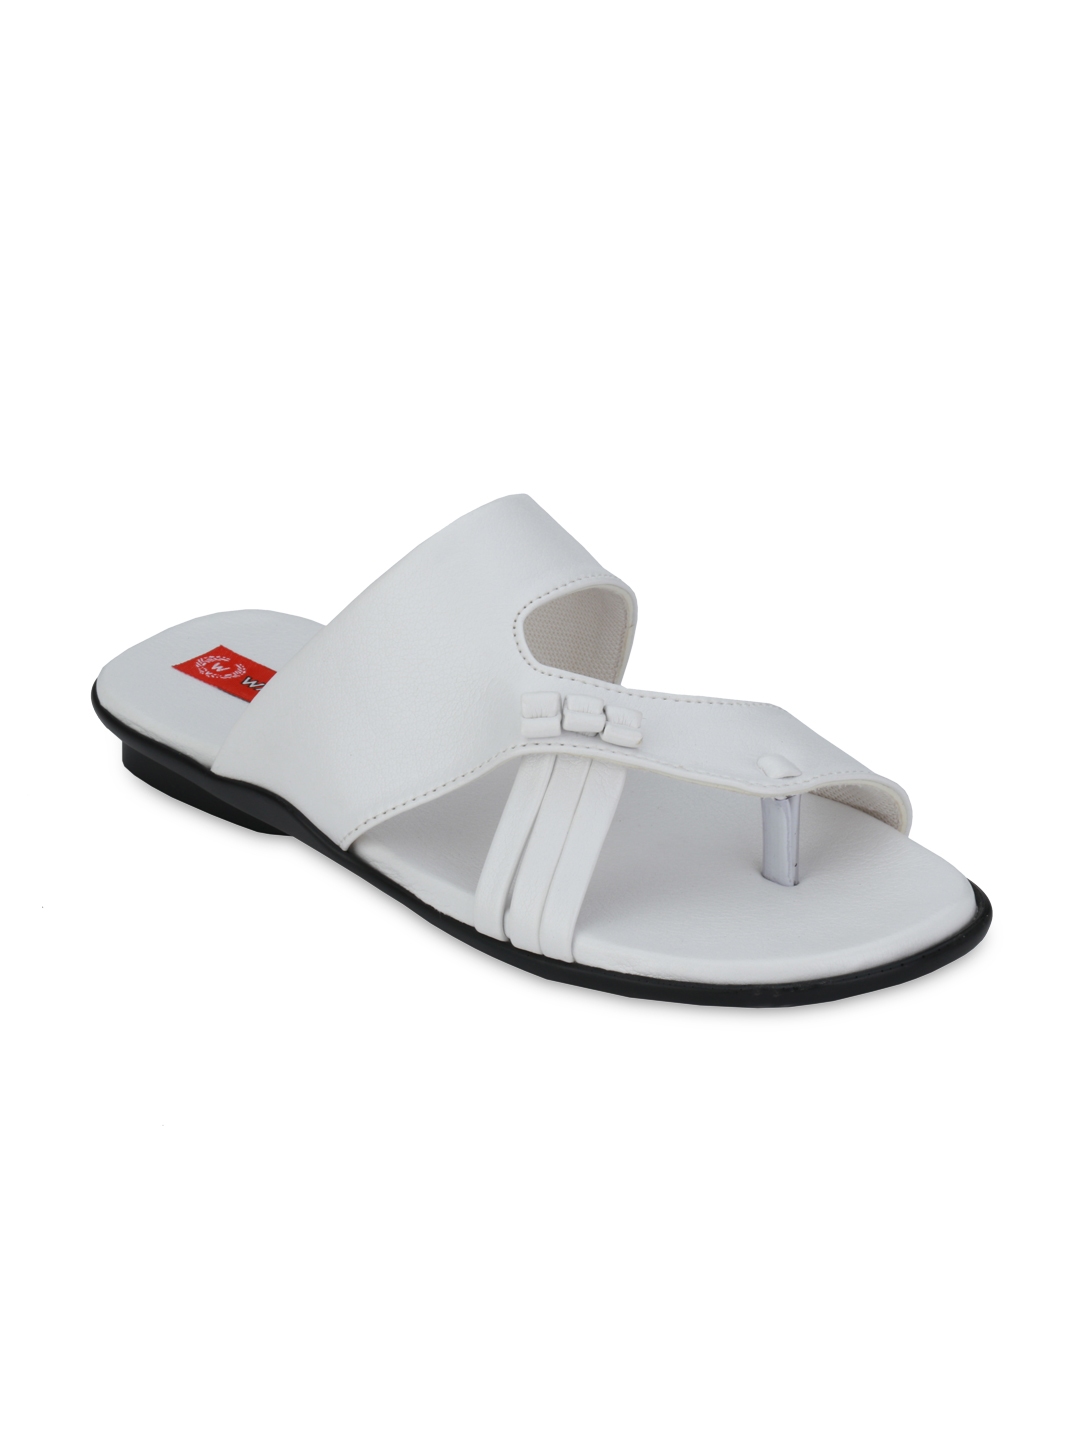 Buy WAVE WALK Men White Sandals - Sandals for Men 1265039 | Myntra